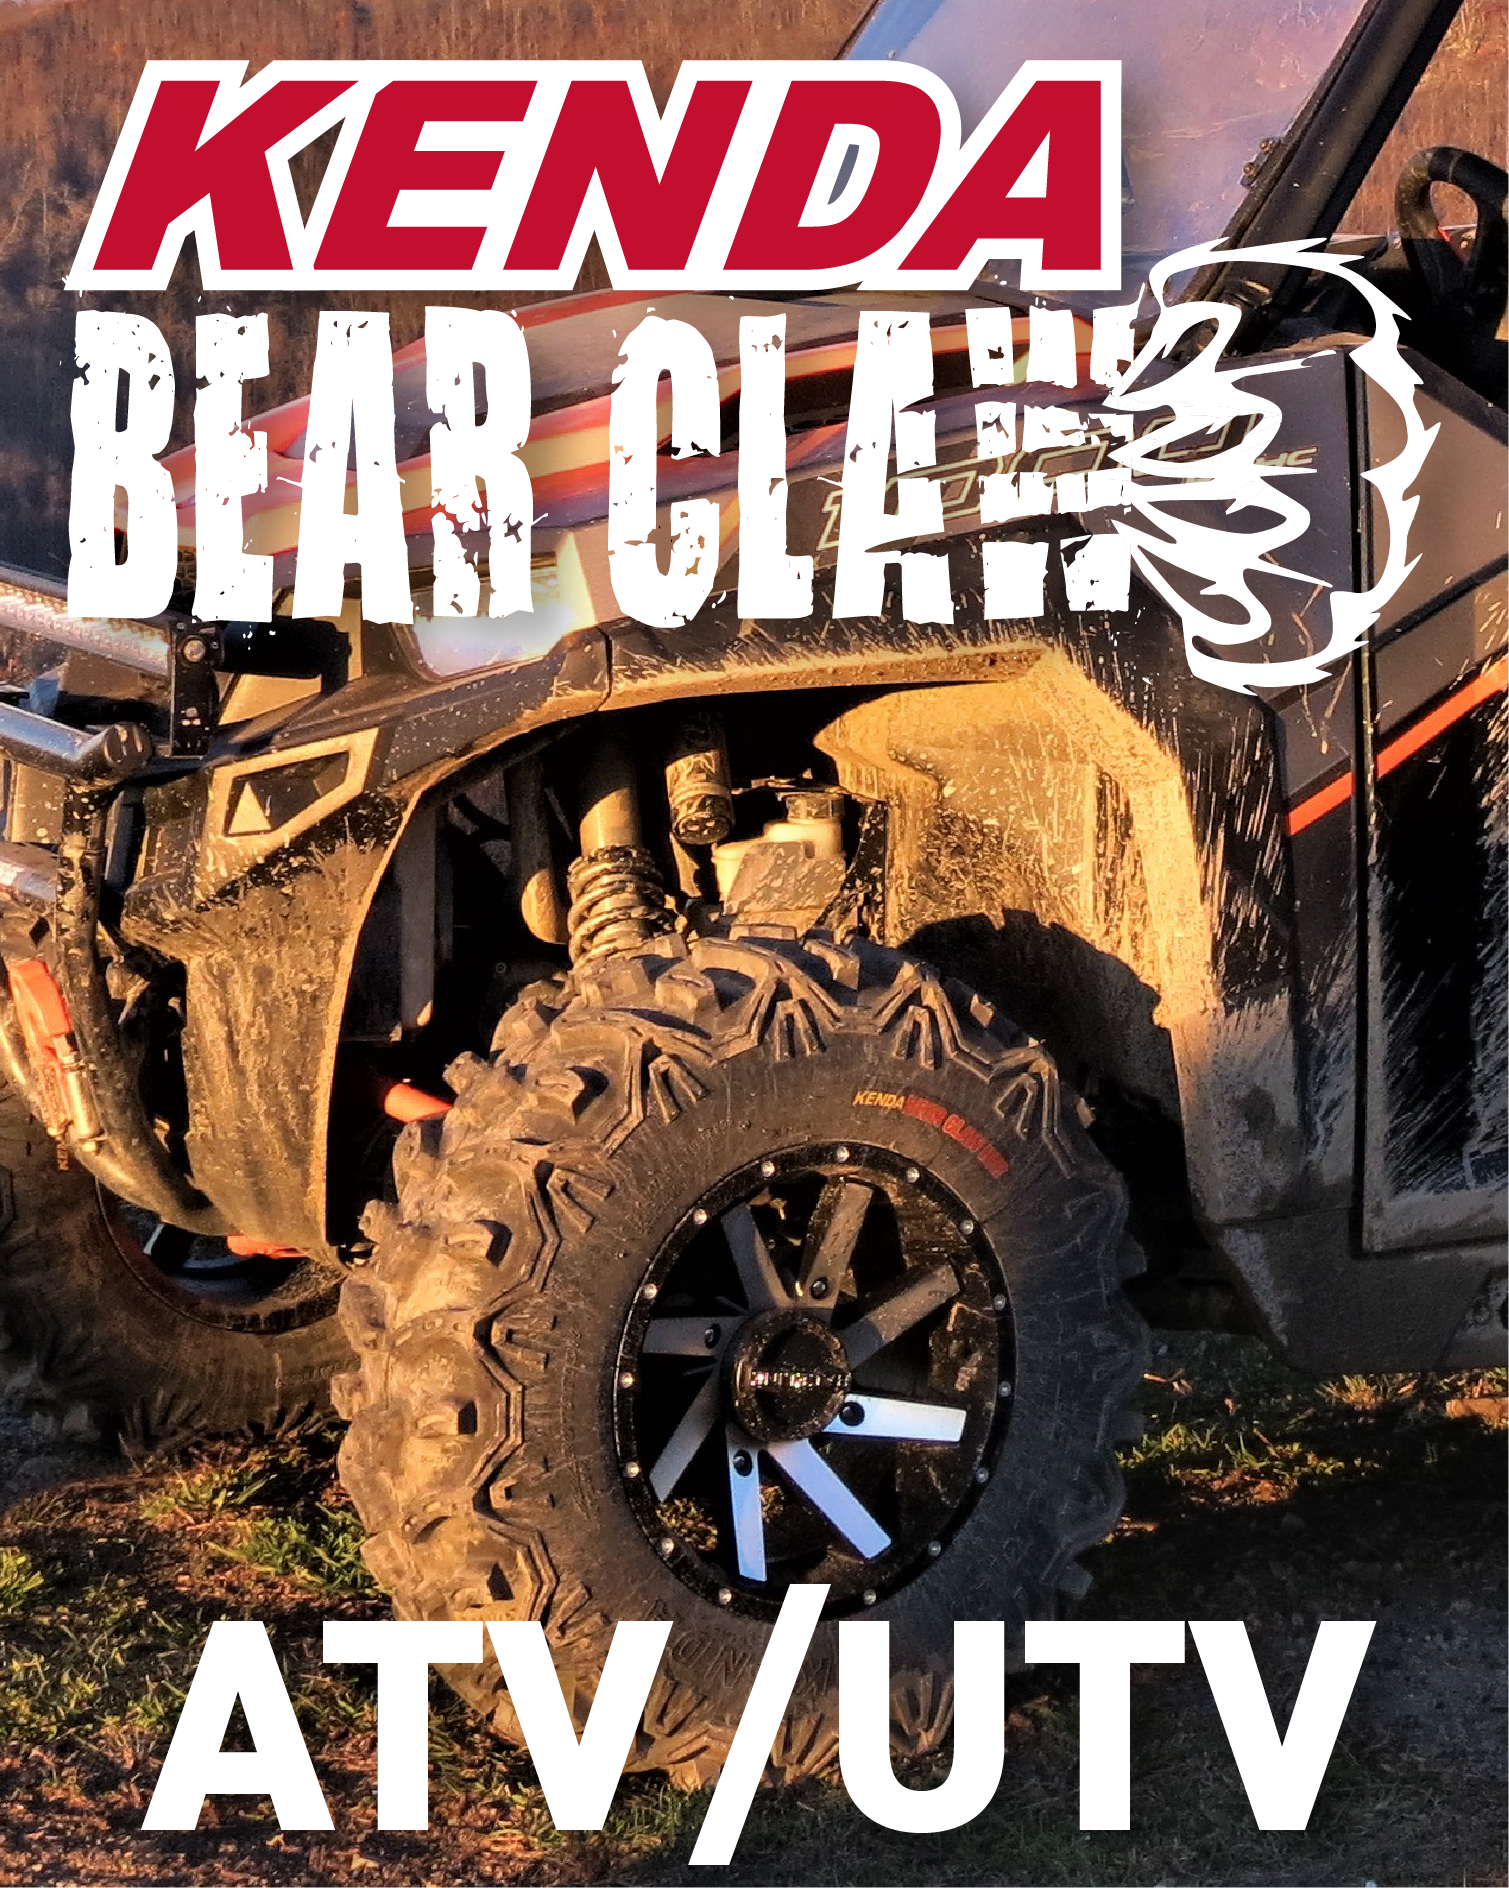 Kenda Bear Claw EX 26x12-12 Rear ATV 6 PLY Tires Bearclaw 26x12x12 (4 Pack)